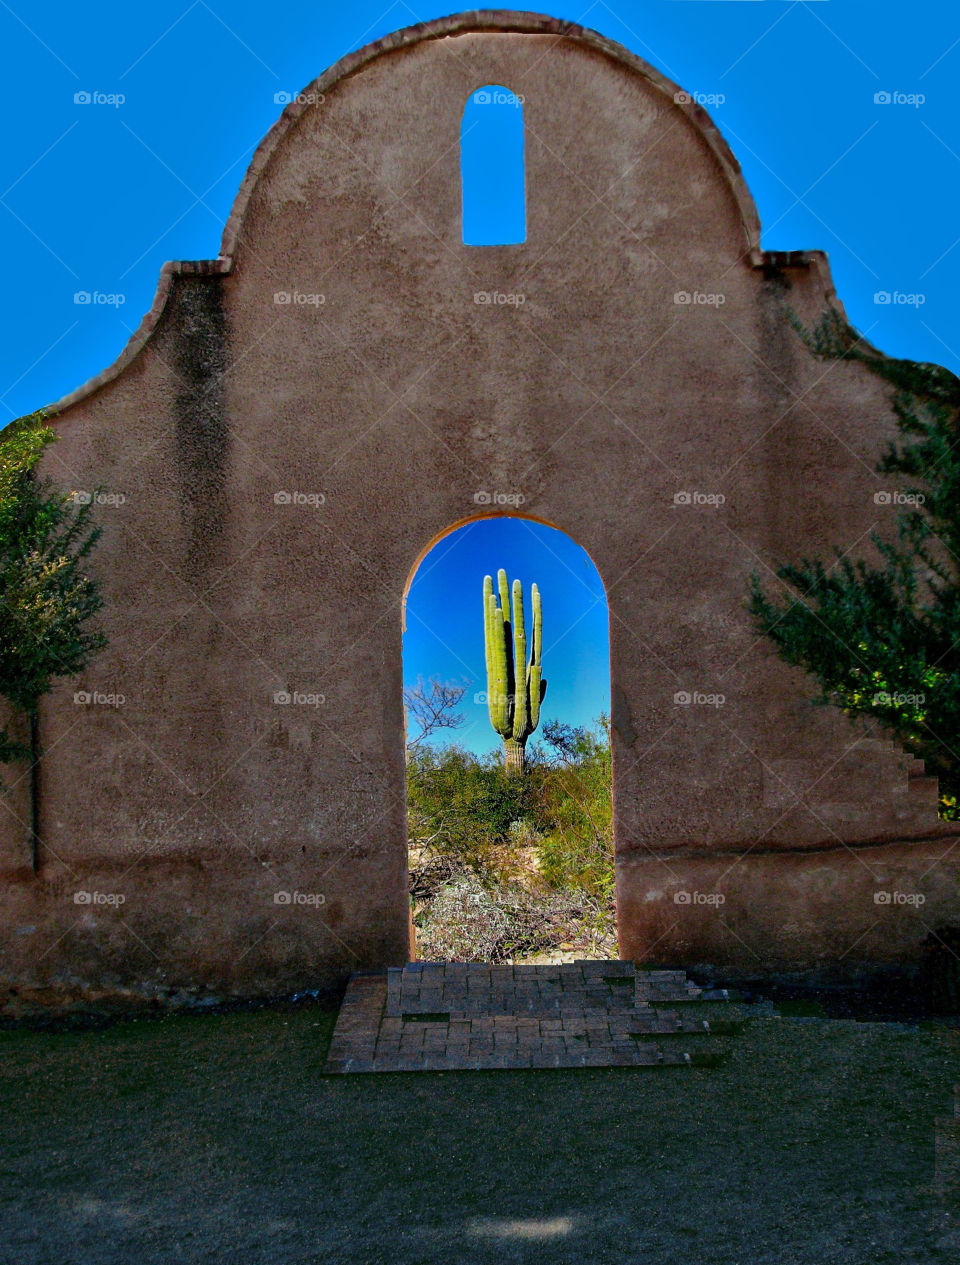 cactus arizona scenic arch by landon